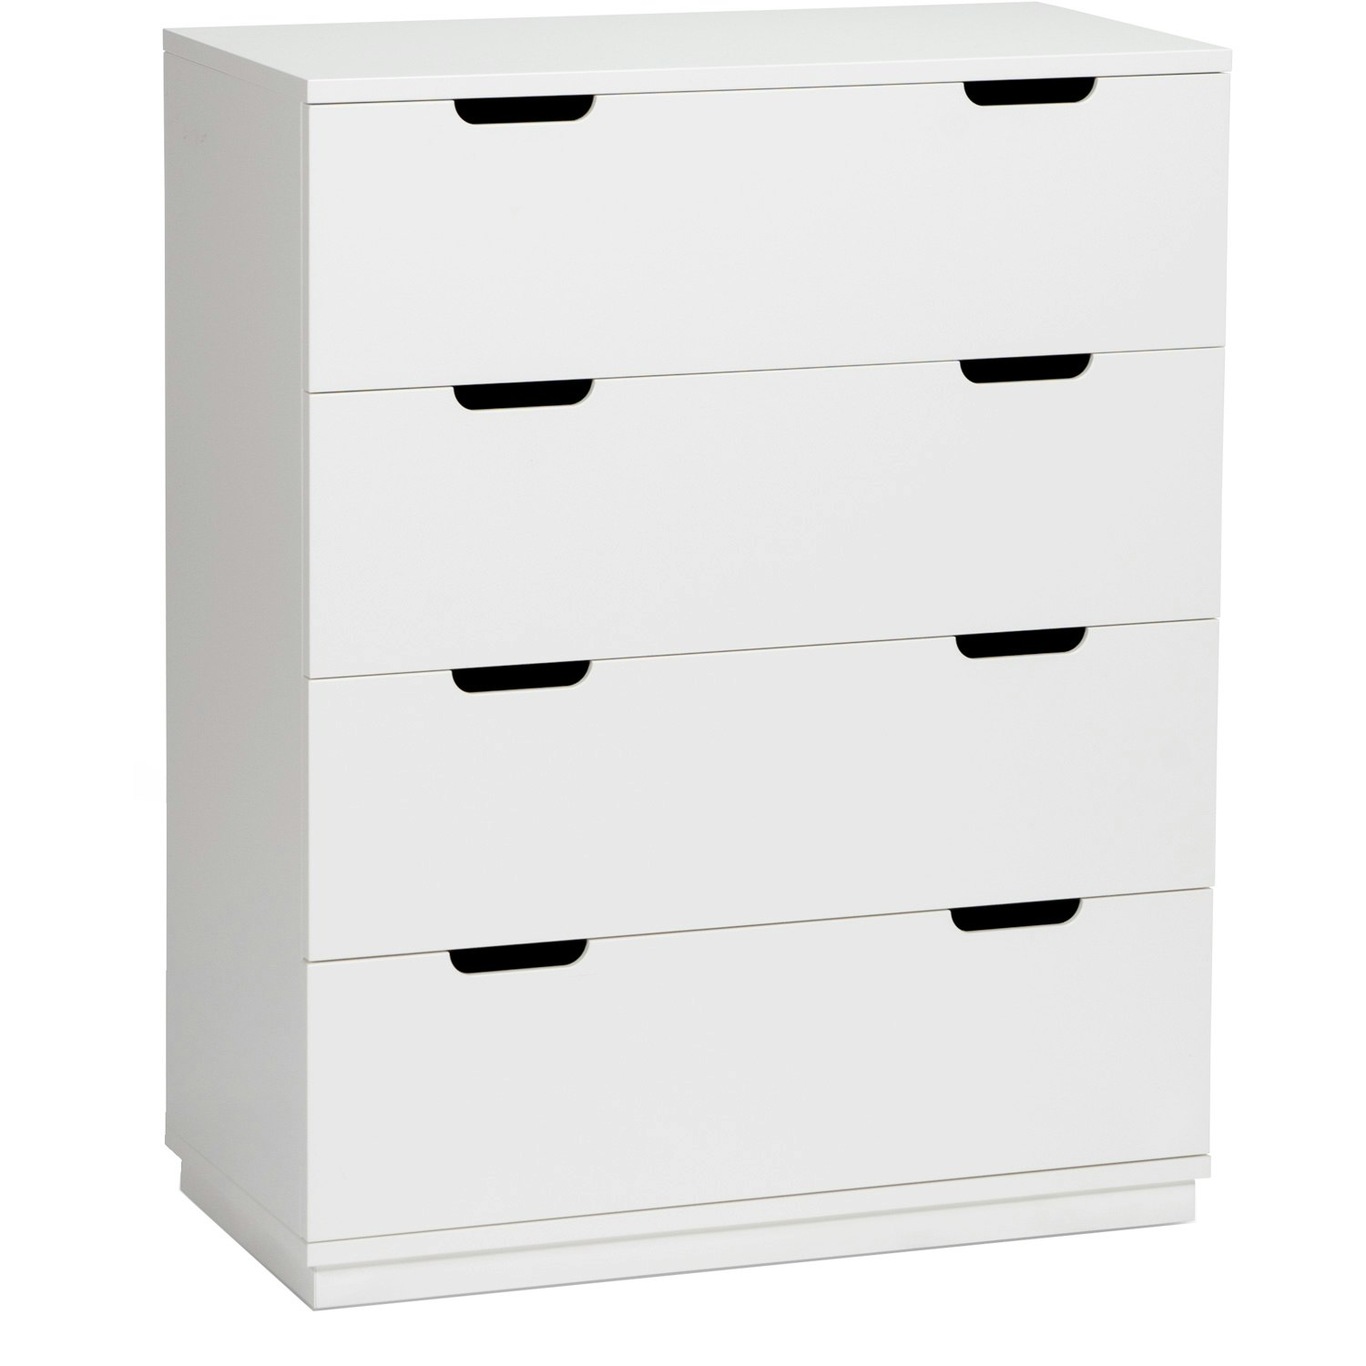 Aoko chest of drawers, white lacquer - Mavis @ RoyalDesign